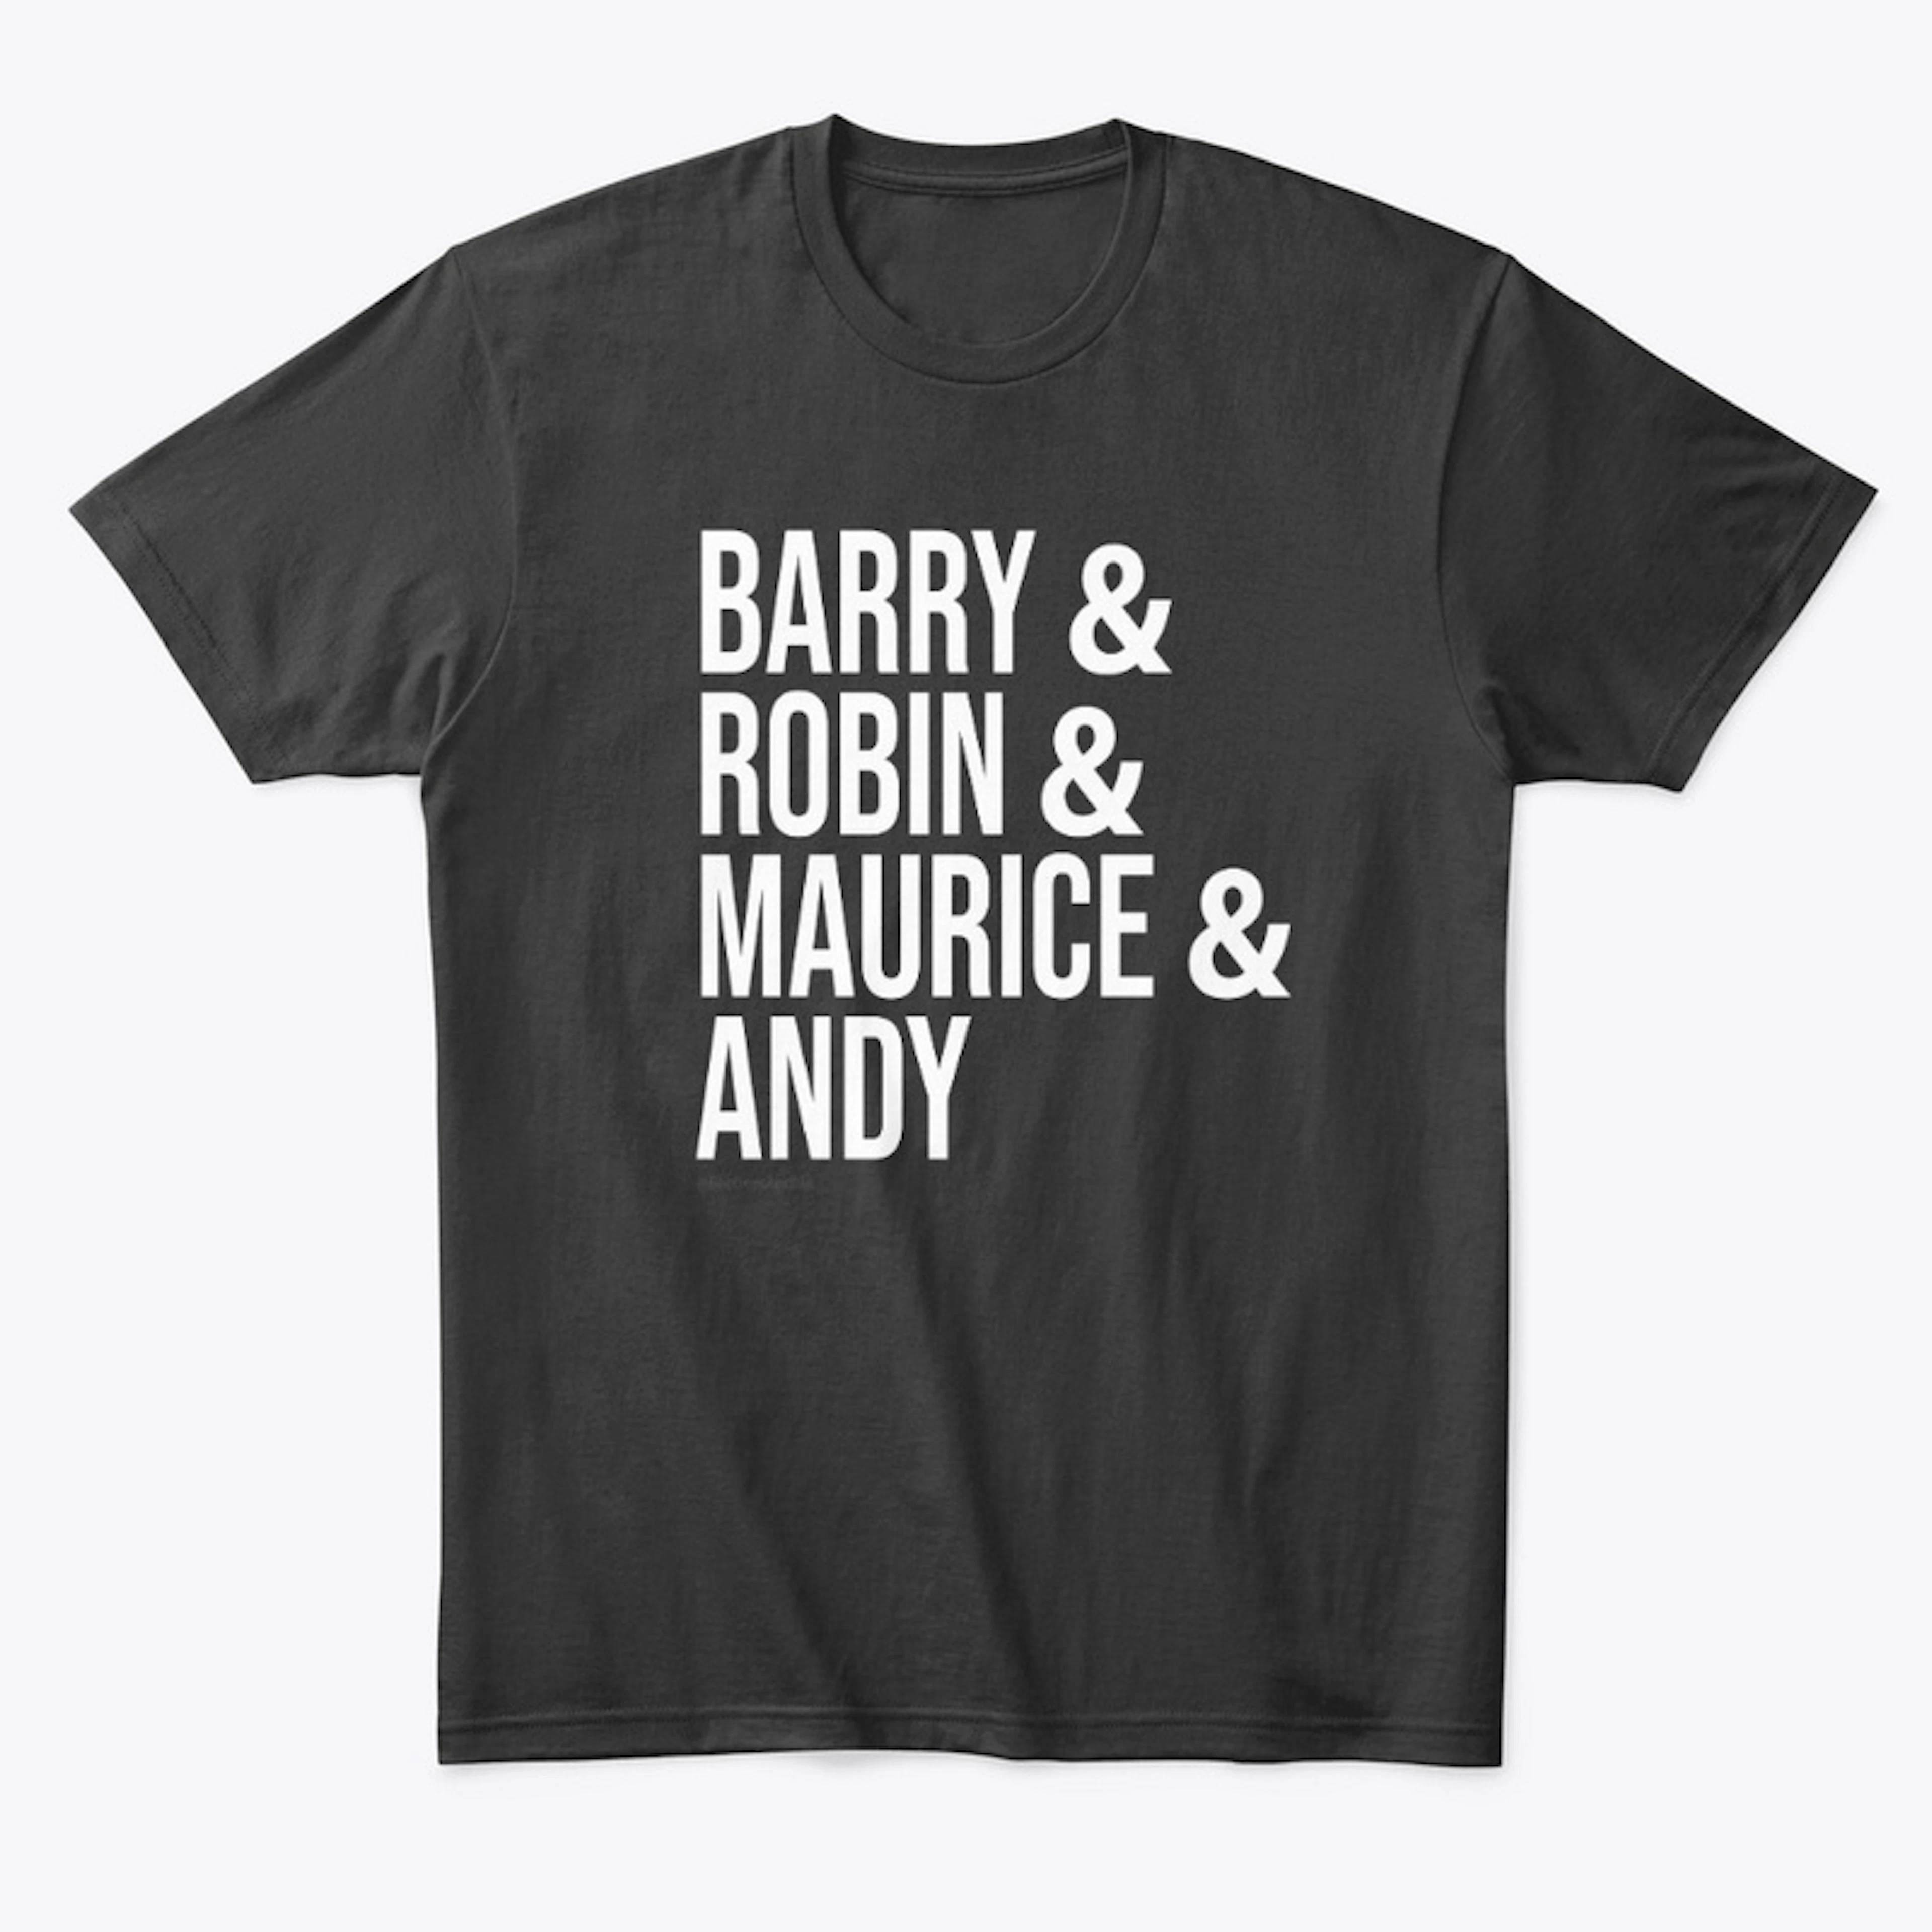 Barry & Robin & Maurice & Andy